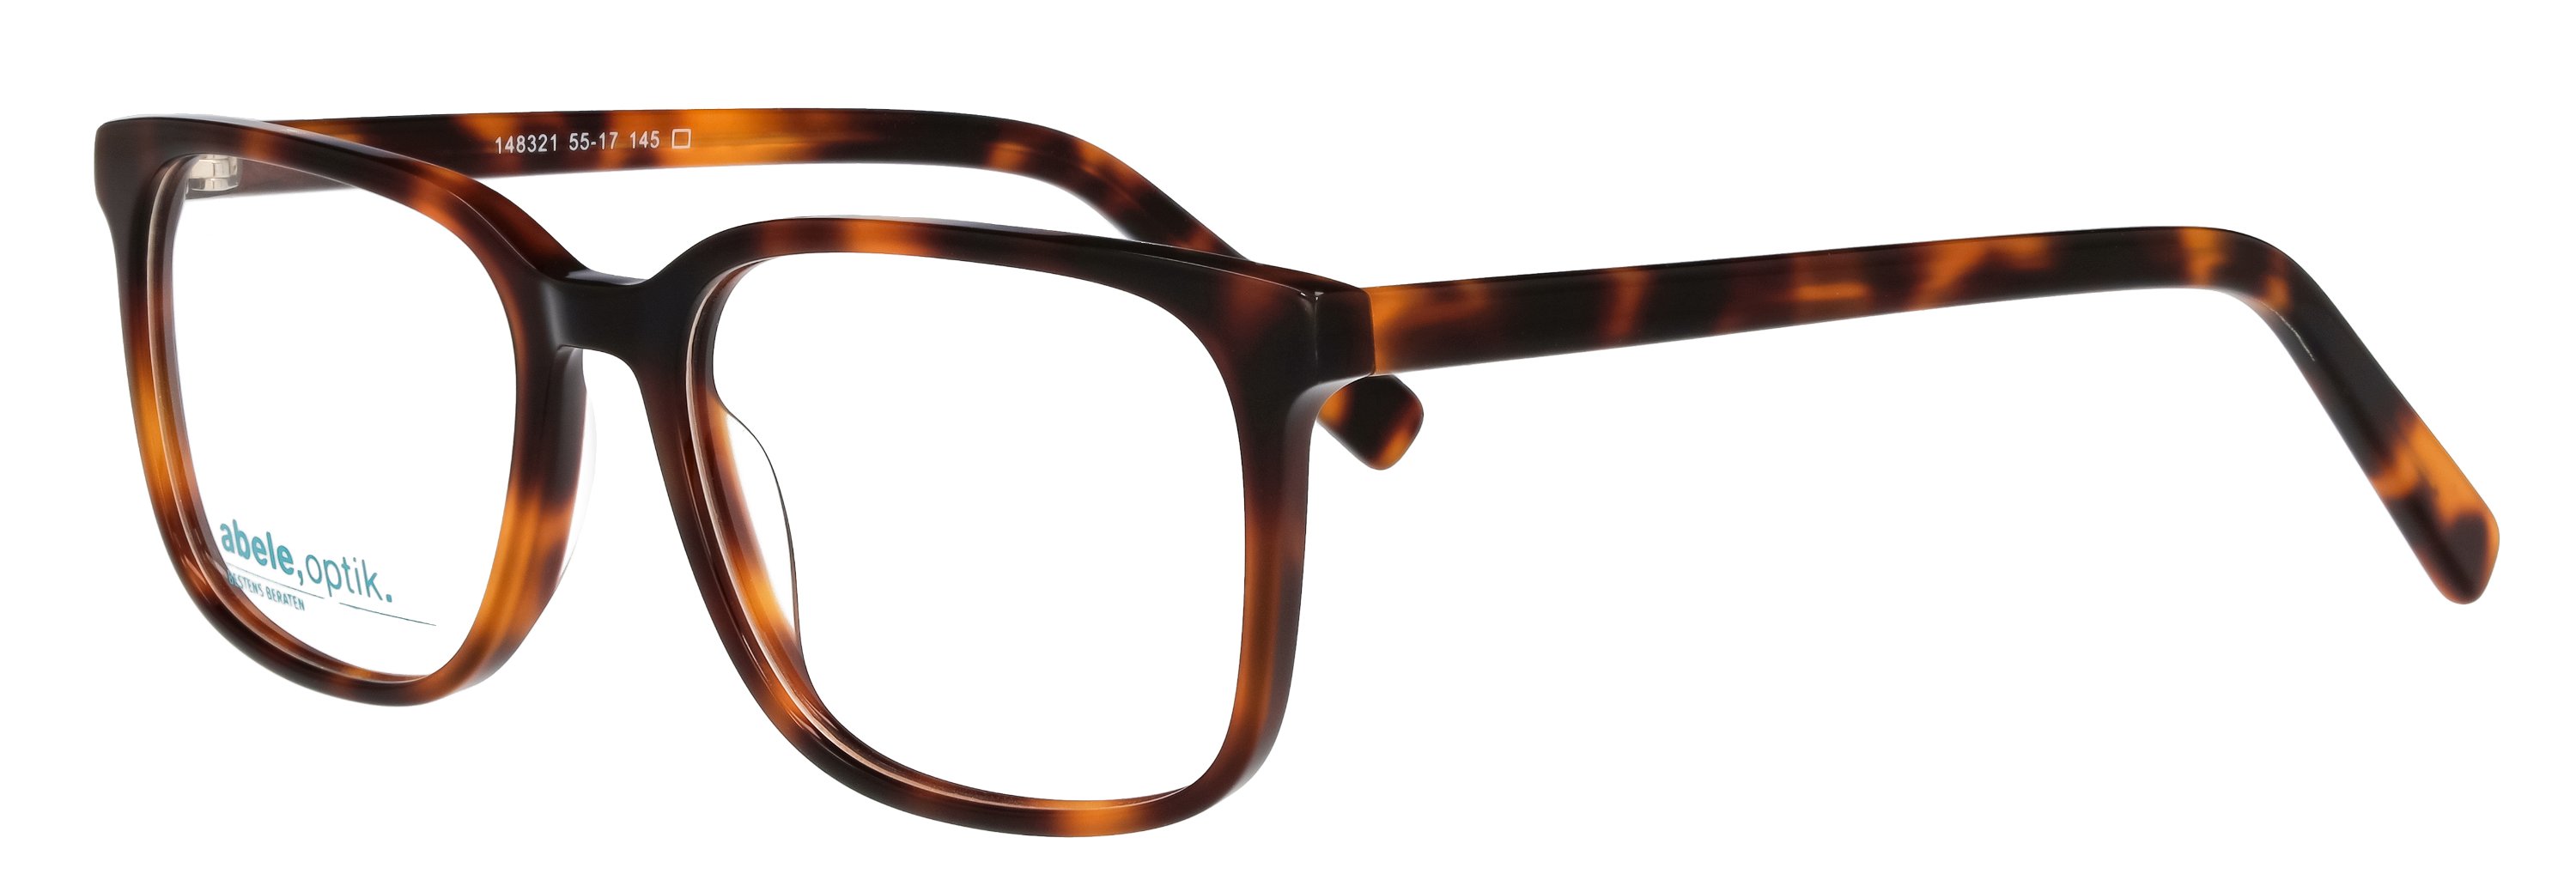 abele optik Brille für Herren 148321 in havanna